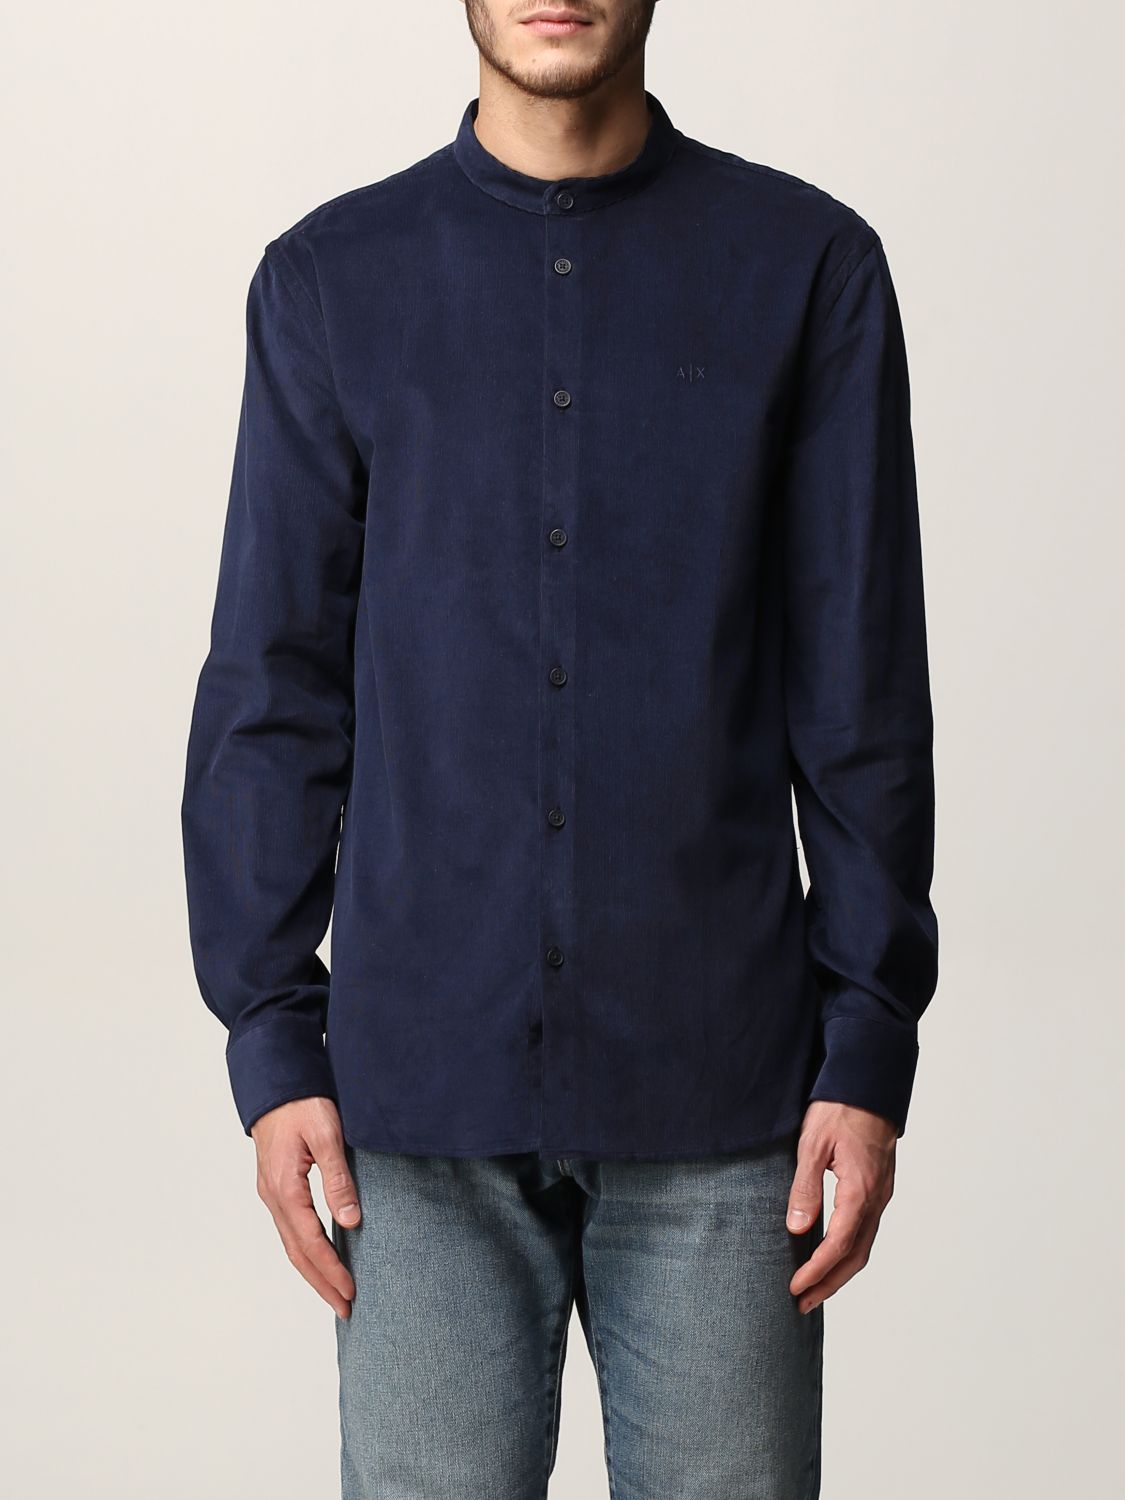 ARMANI EXCHANGE: velvet shirt with embroidered logo - Blue | Armani ...